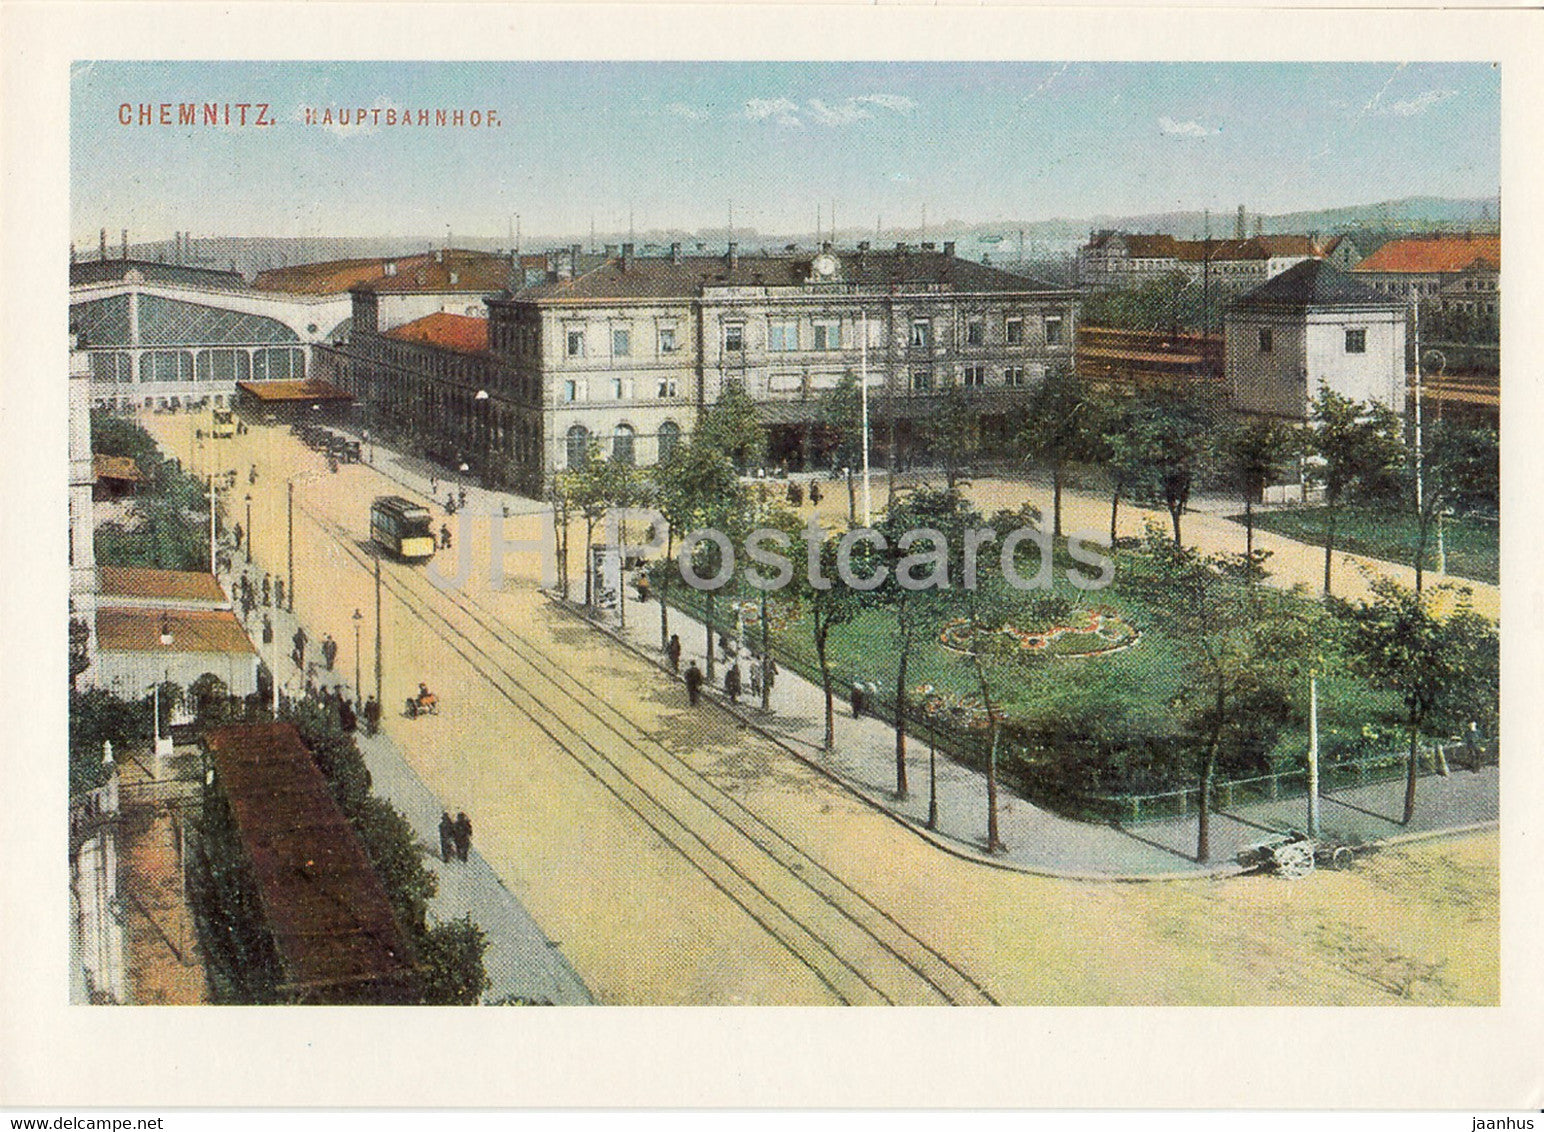 Karl Marx Stadt - Chemnitz - Hauptbahnhof - Railway Station - tram - Reproduktion - DDR Germany - unused - JH Postcards